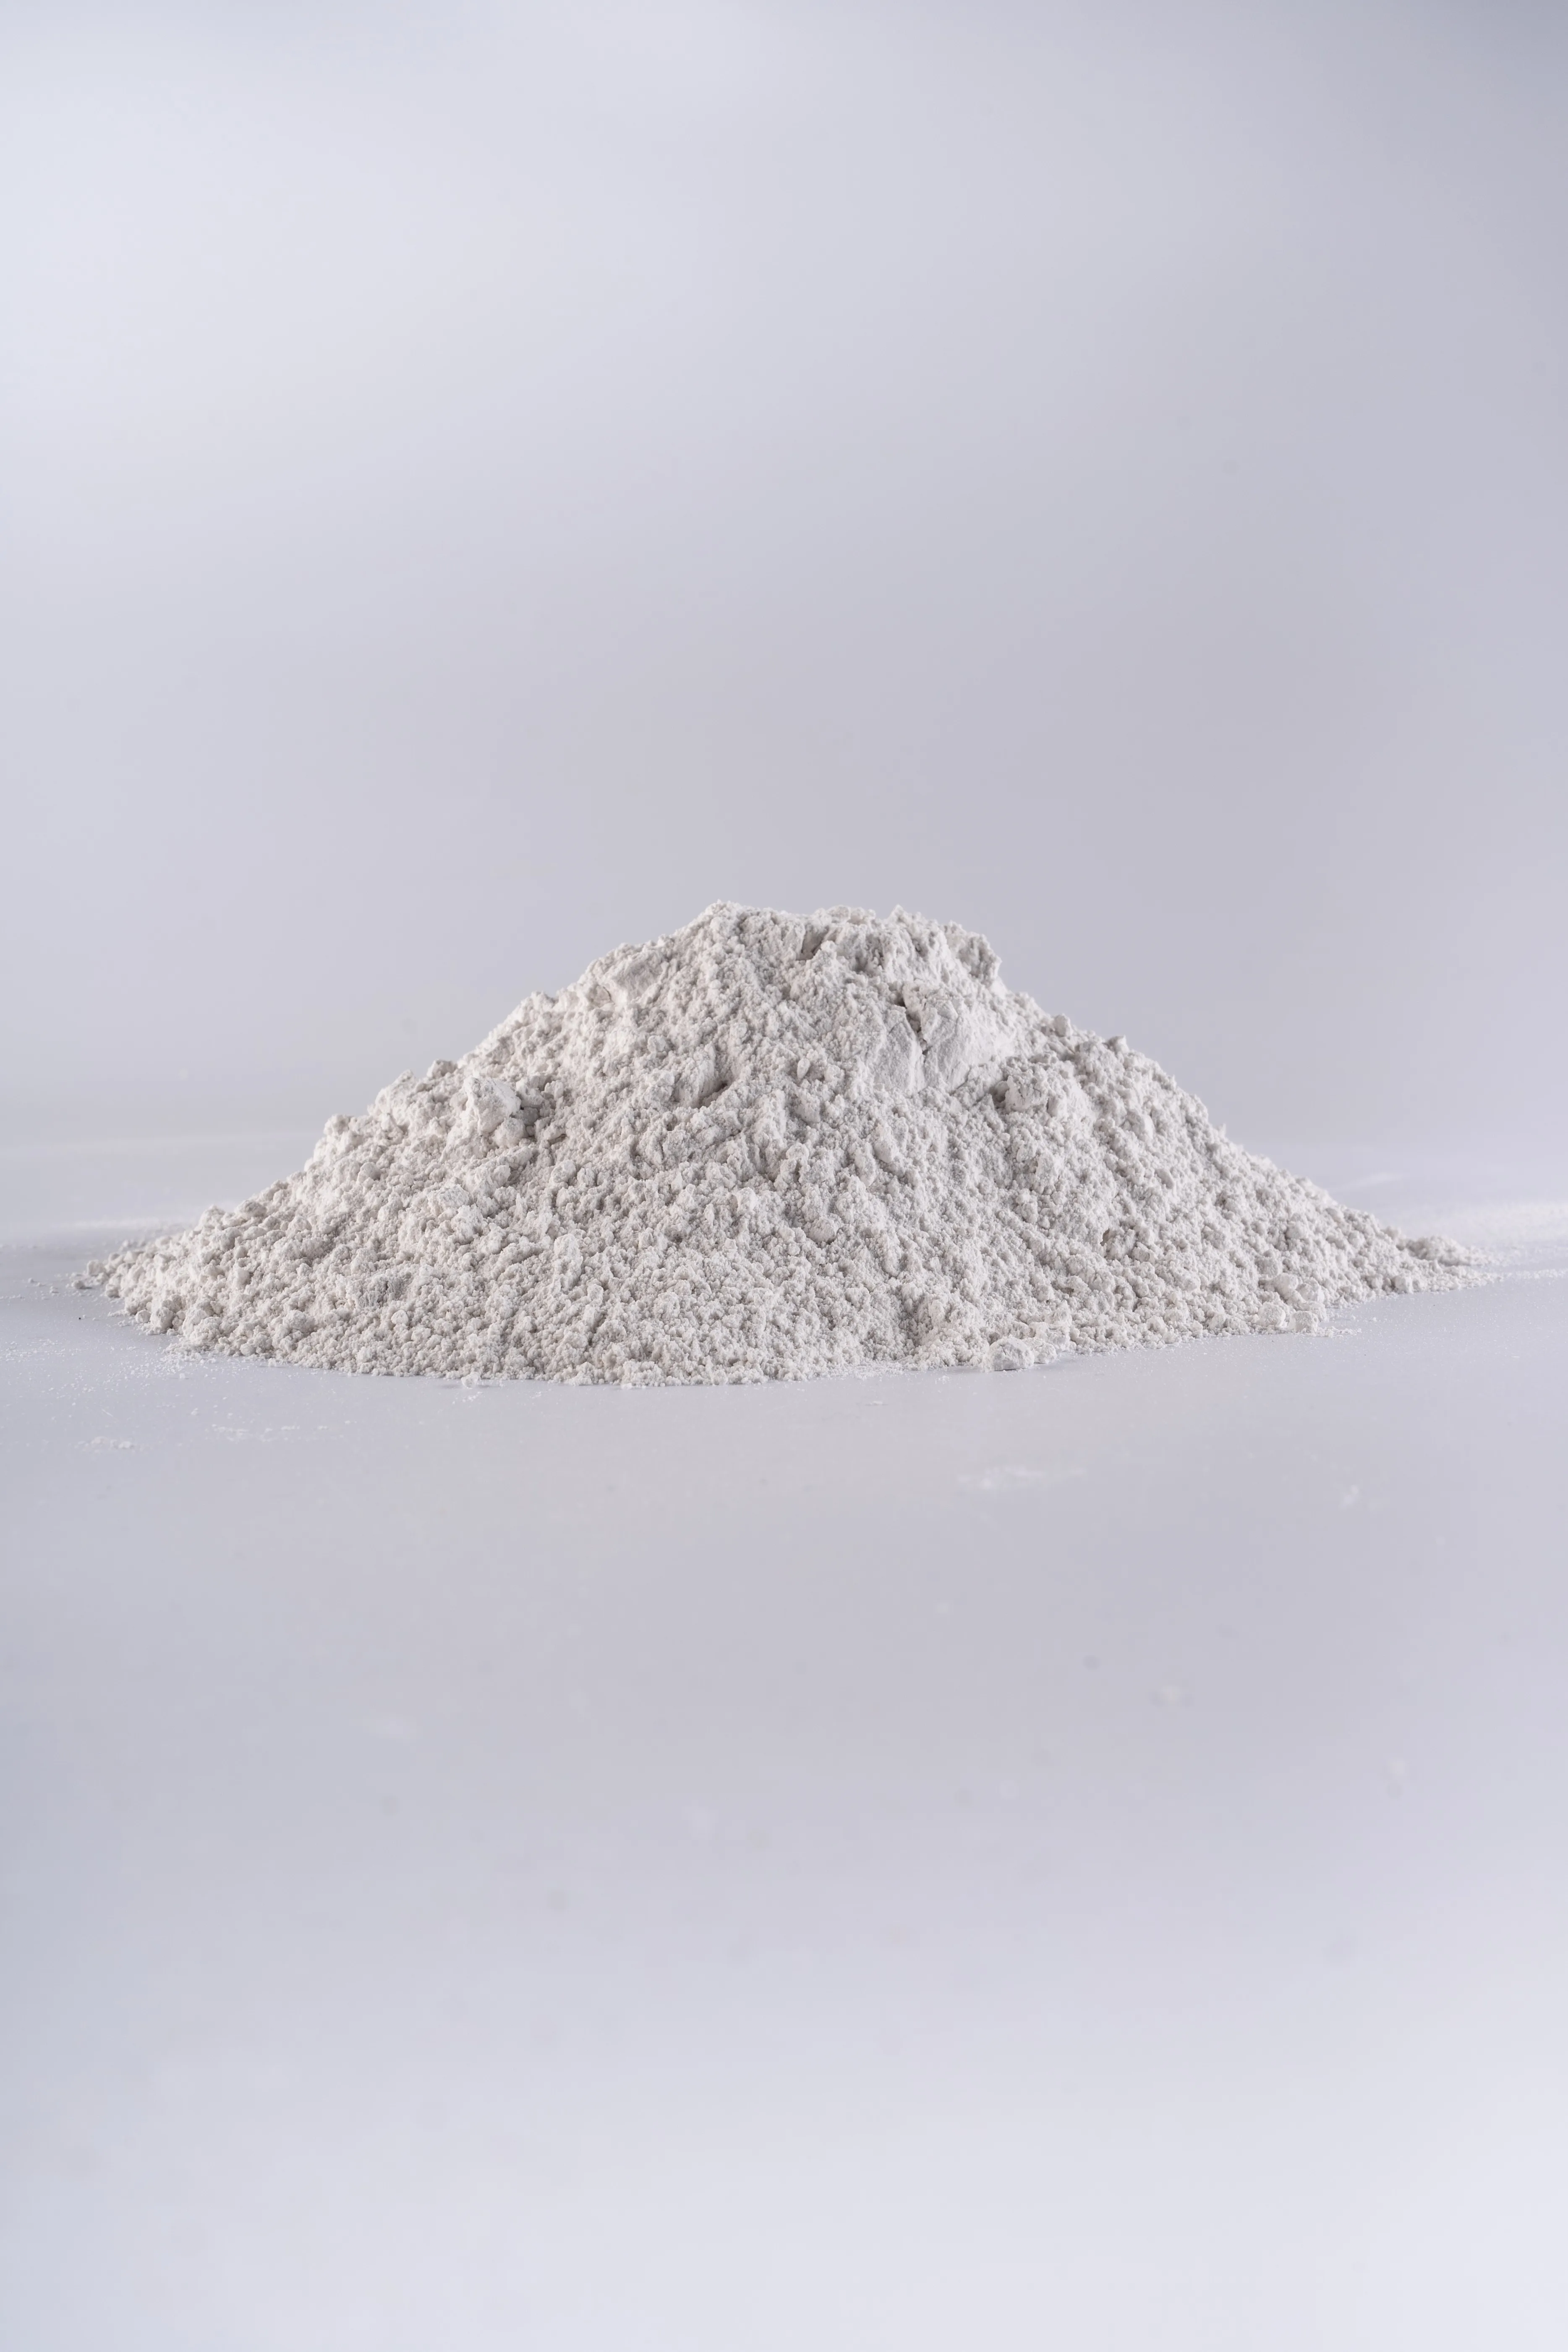 High purity Caf2 99.5% fluorite ore calcium fluorite lump fluorite power